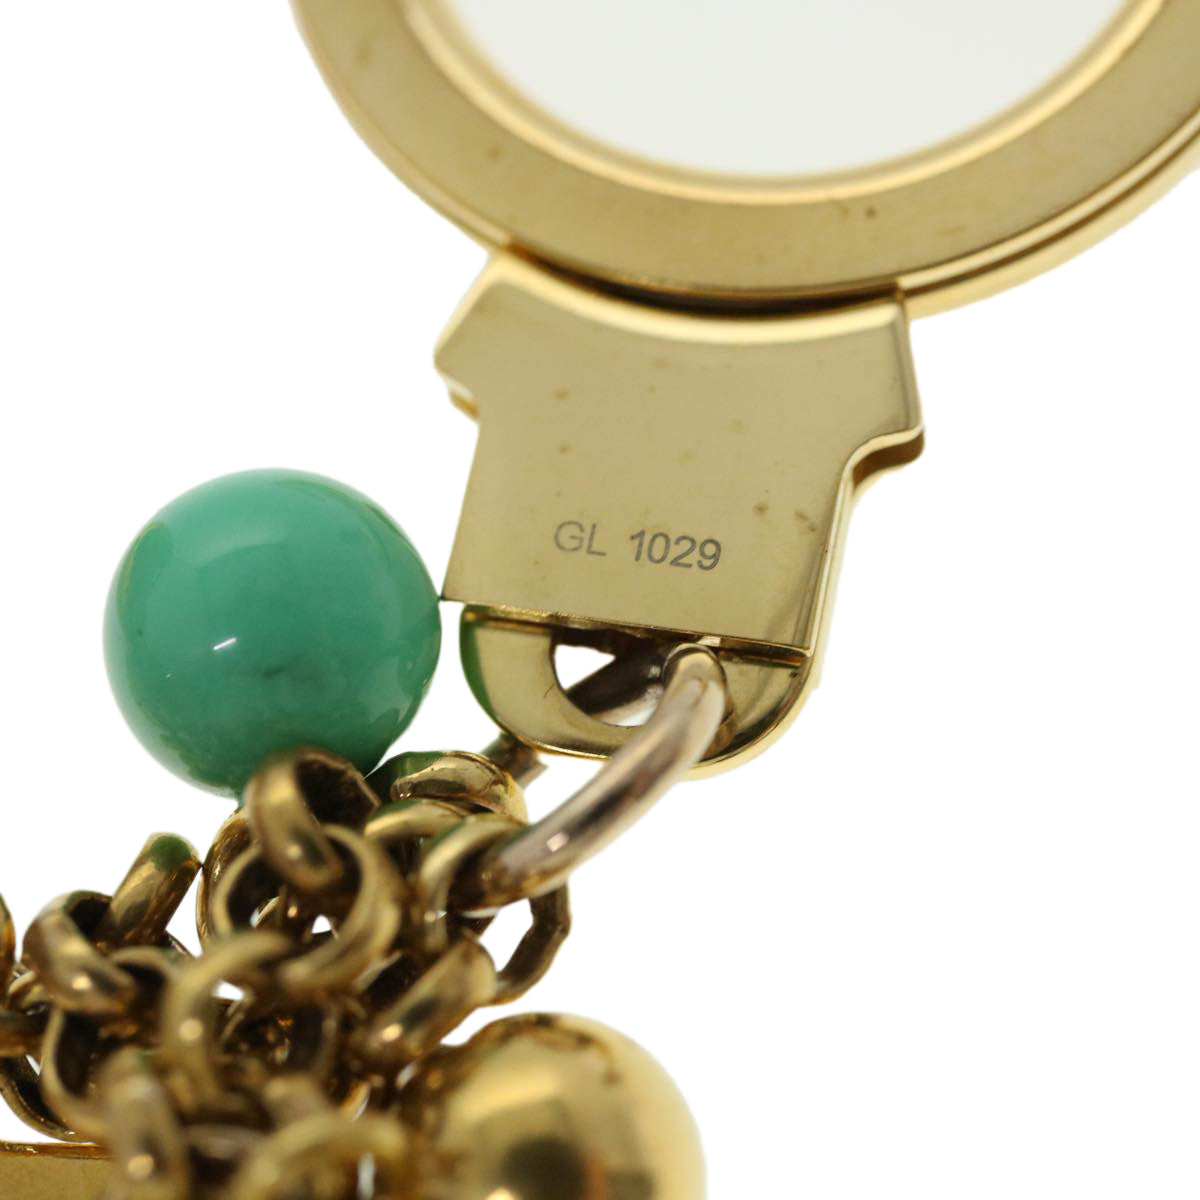 LOUIS VUITTON Porte Cles Delice Candy Key Holder Gold M65999 LV Auth yk6358